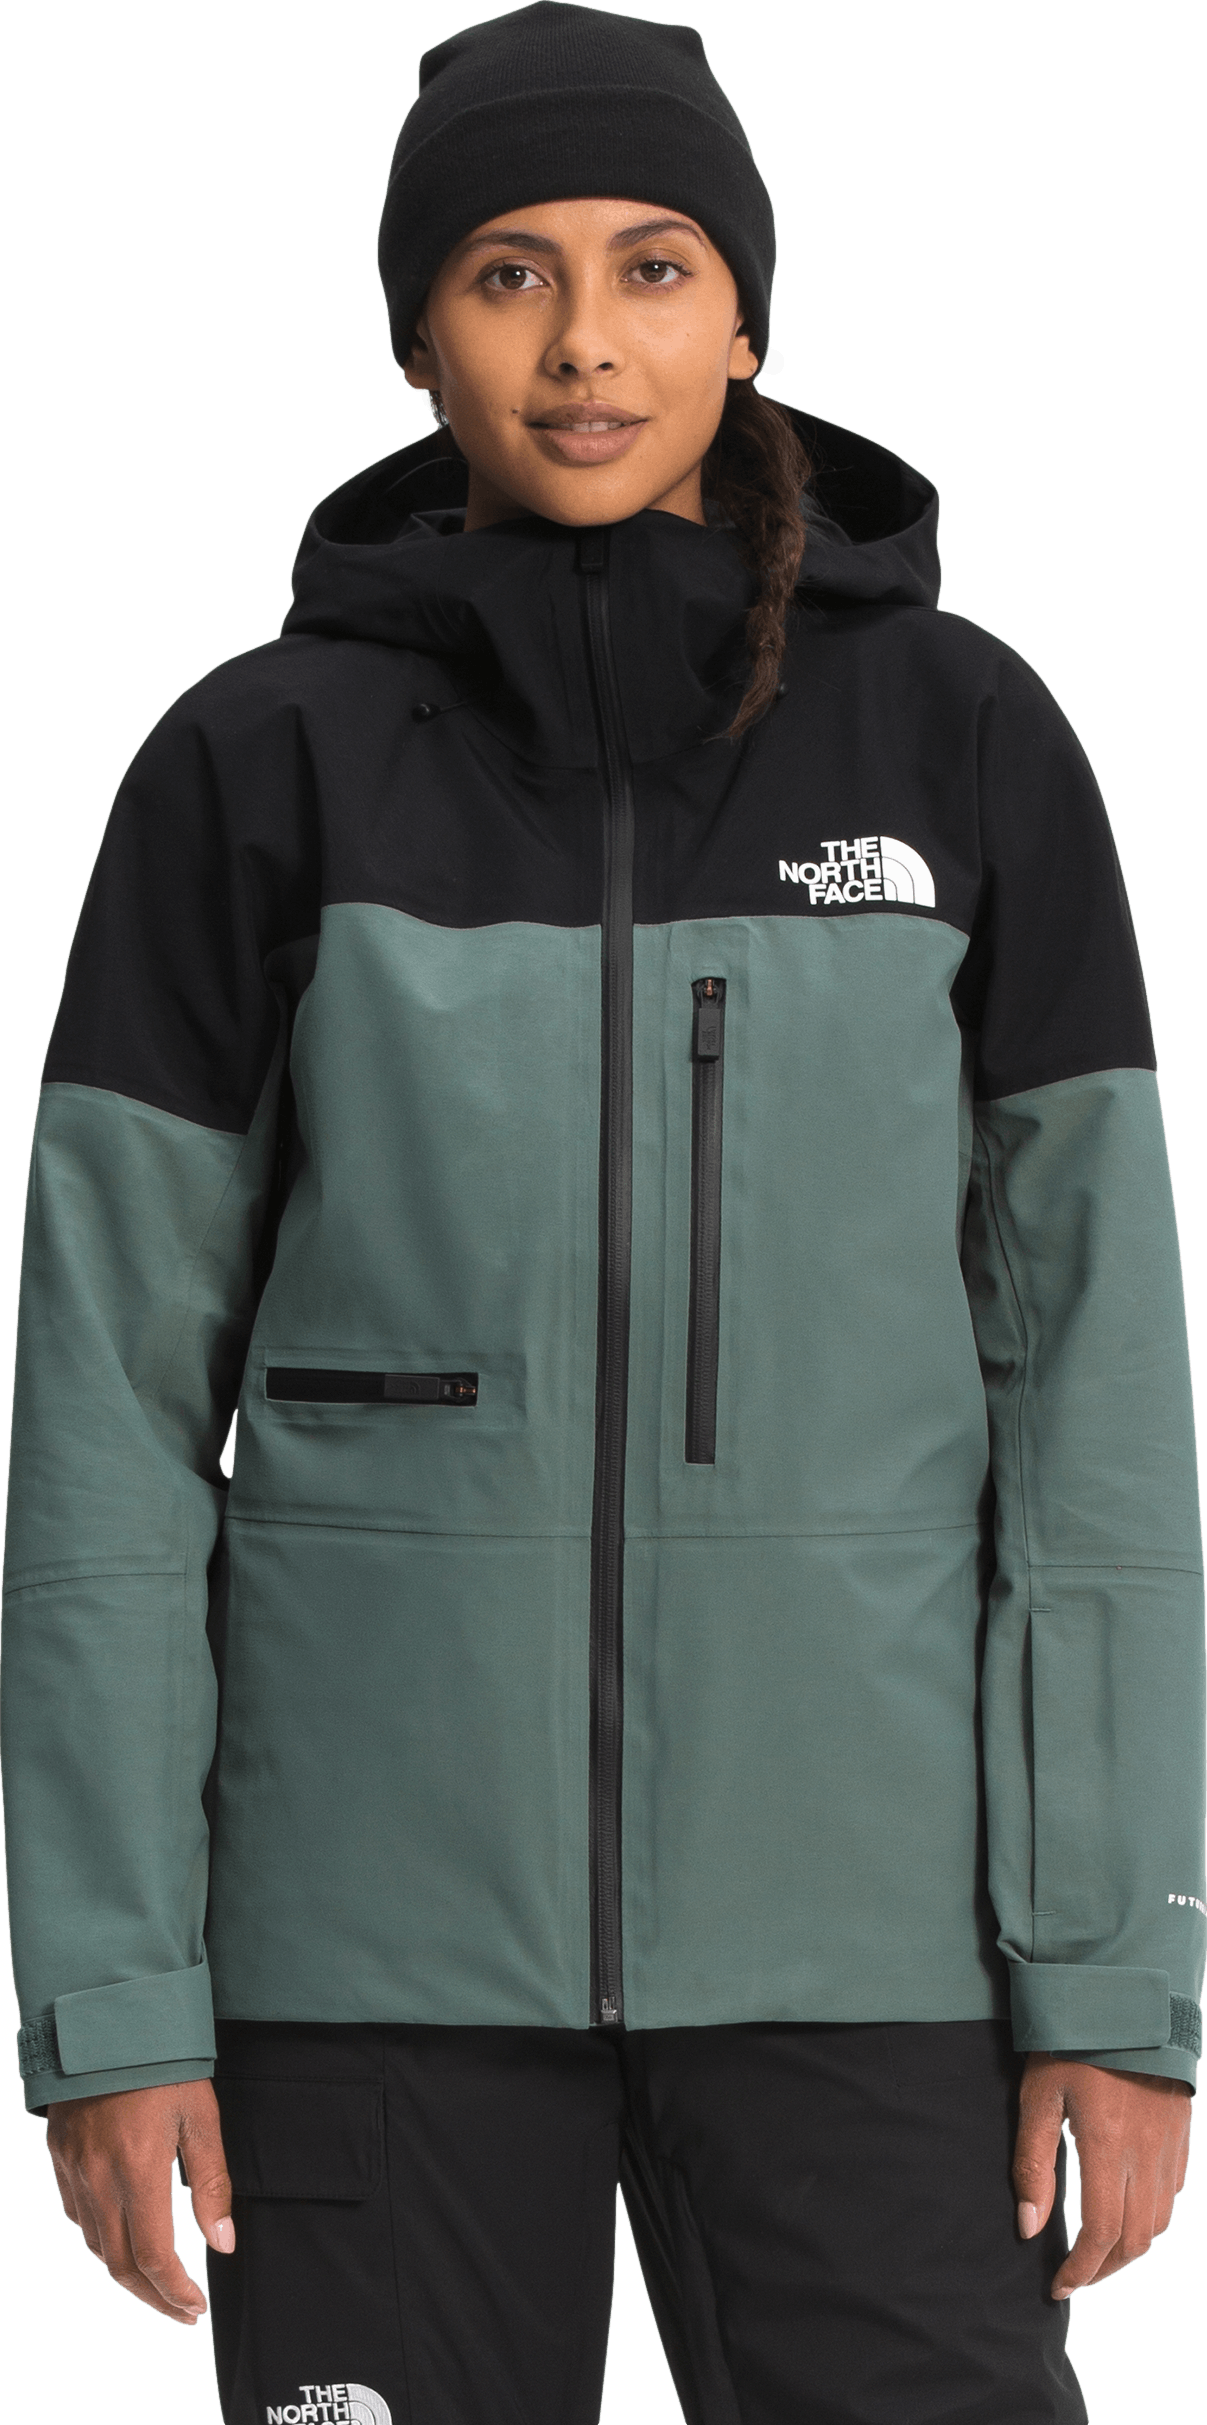 The North Face Women's Powderflo FUTURELIGHT Shell Jacket